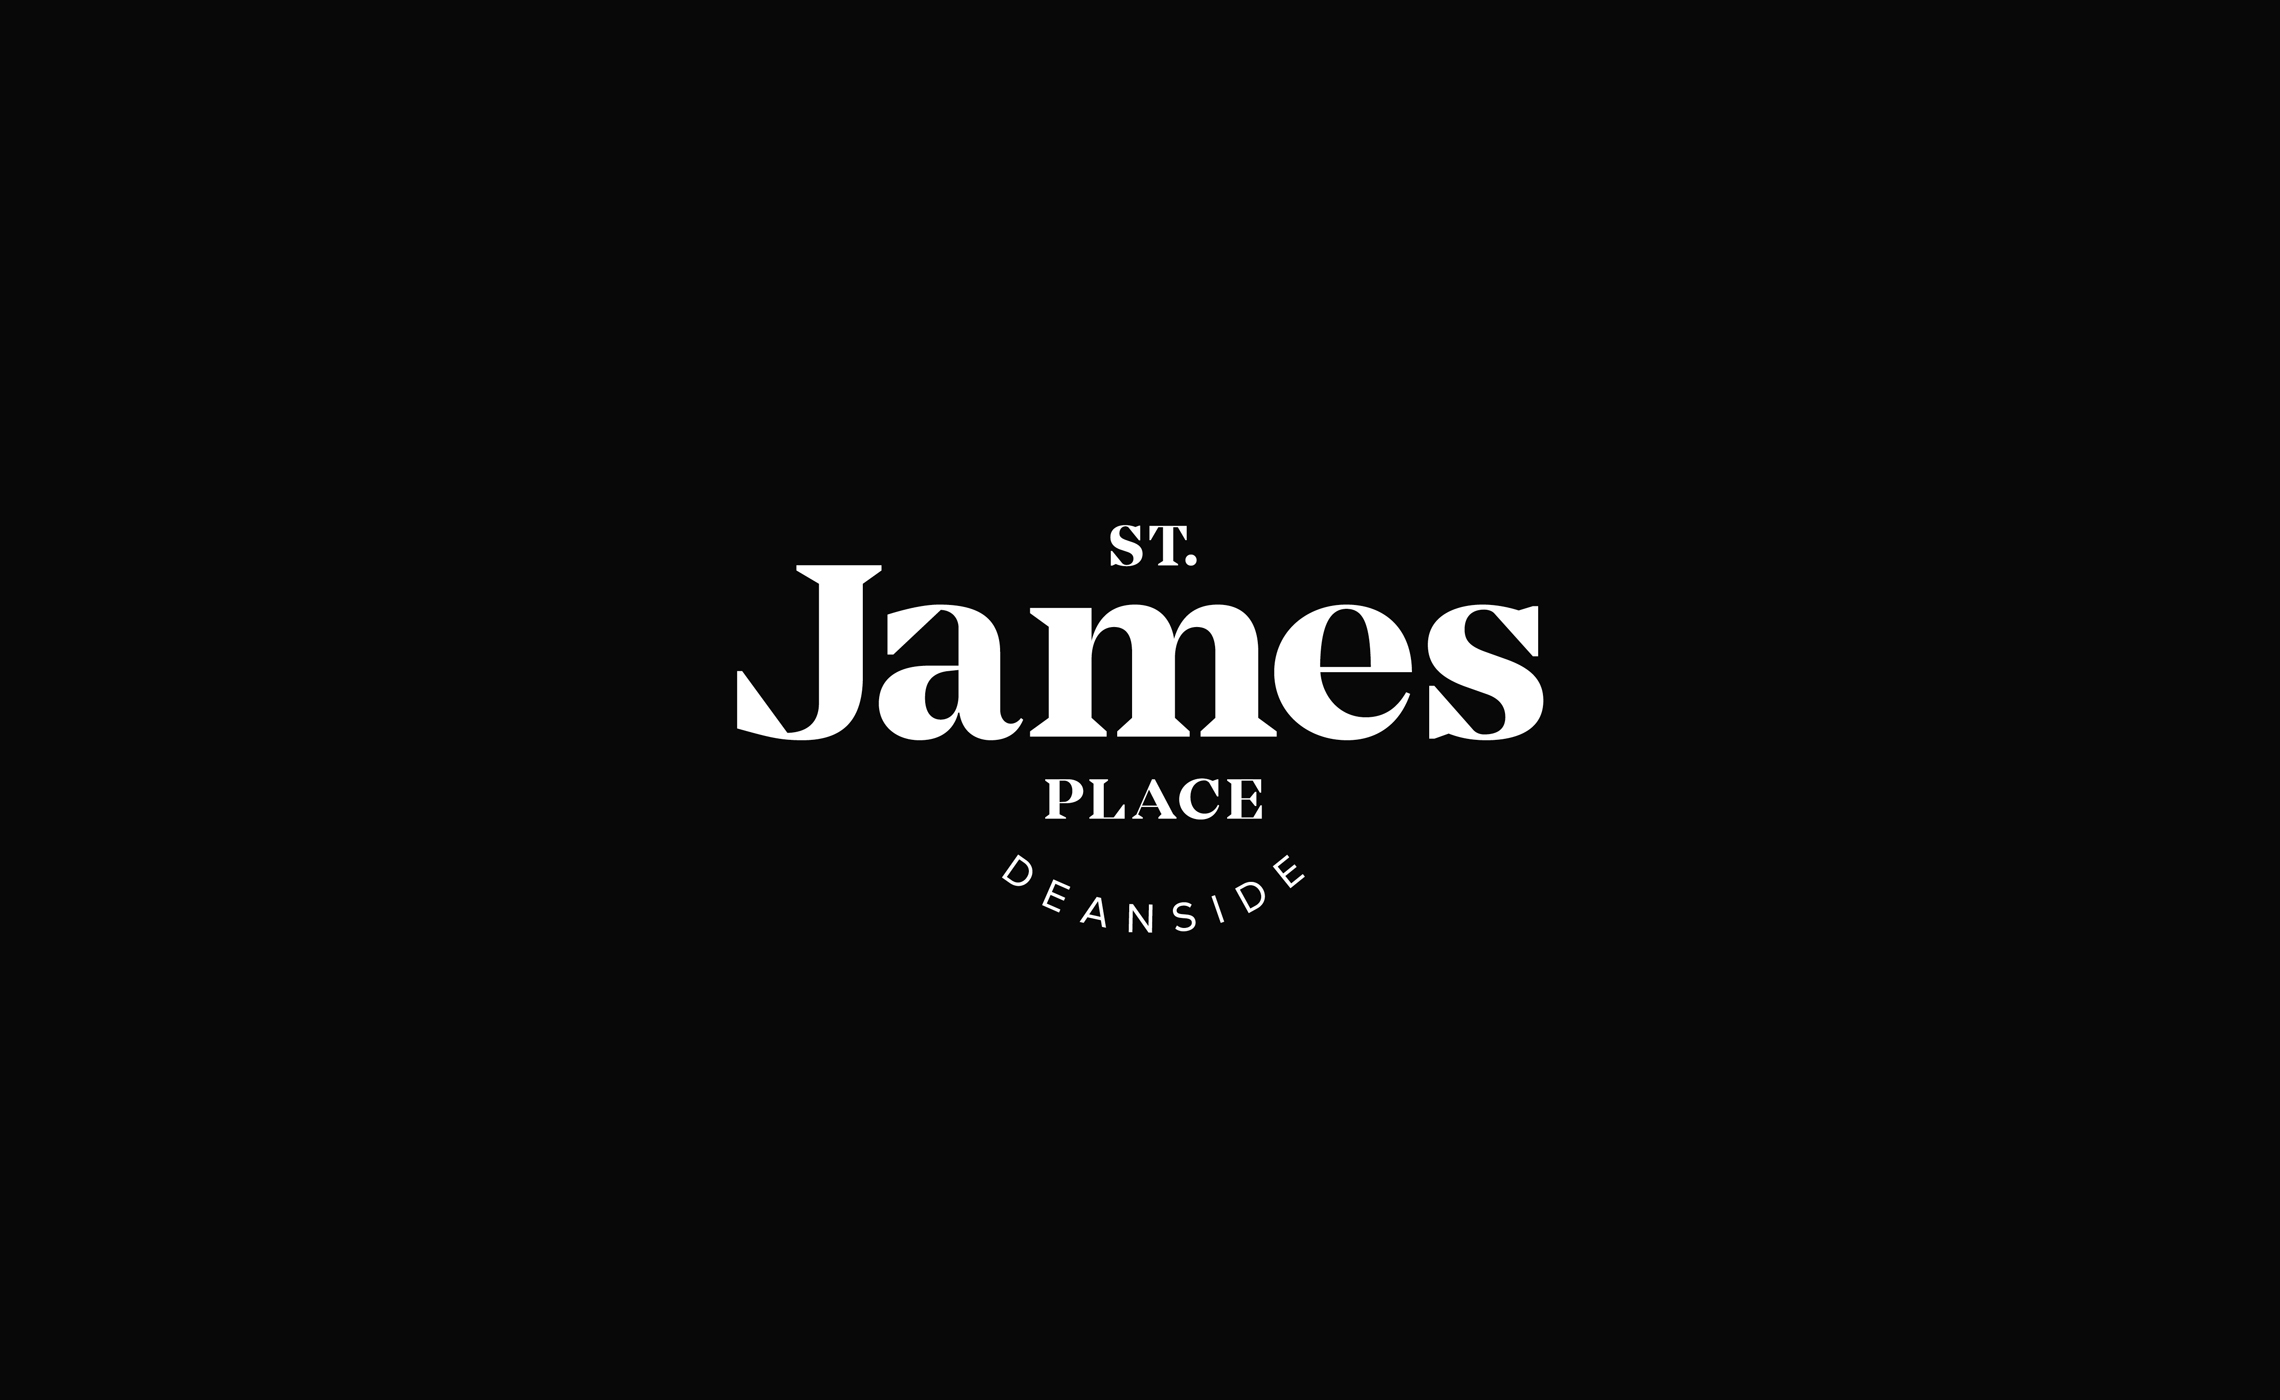 Logos St James Place, Deanside